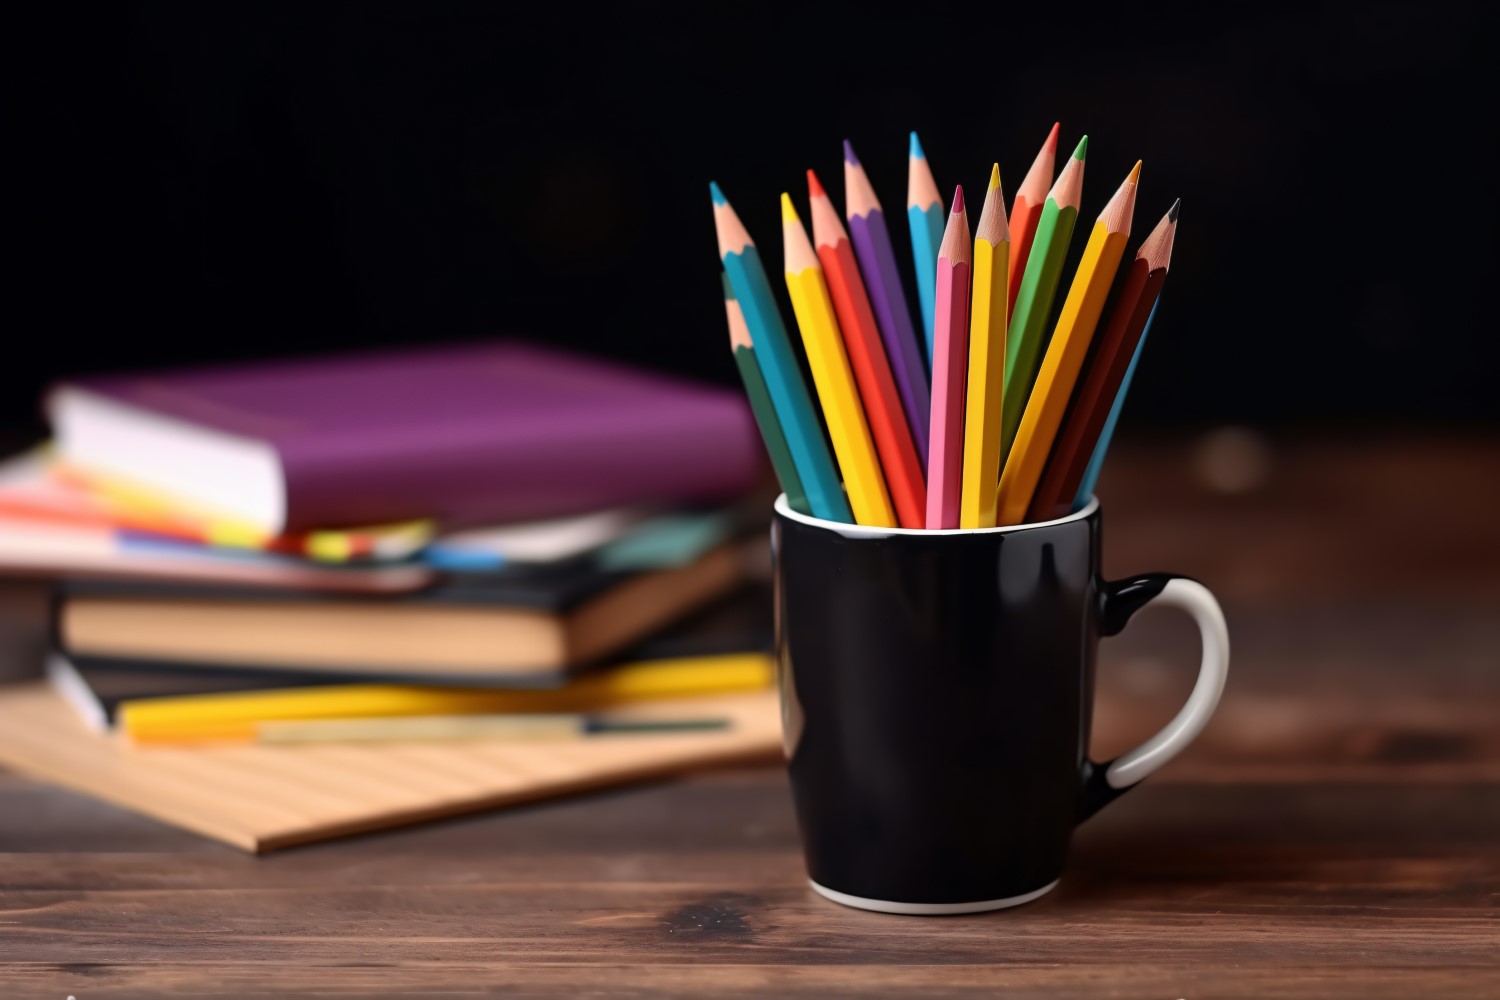 Colourful Pencil School Supplies 114